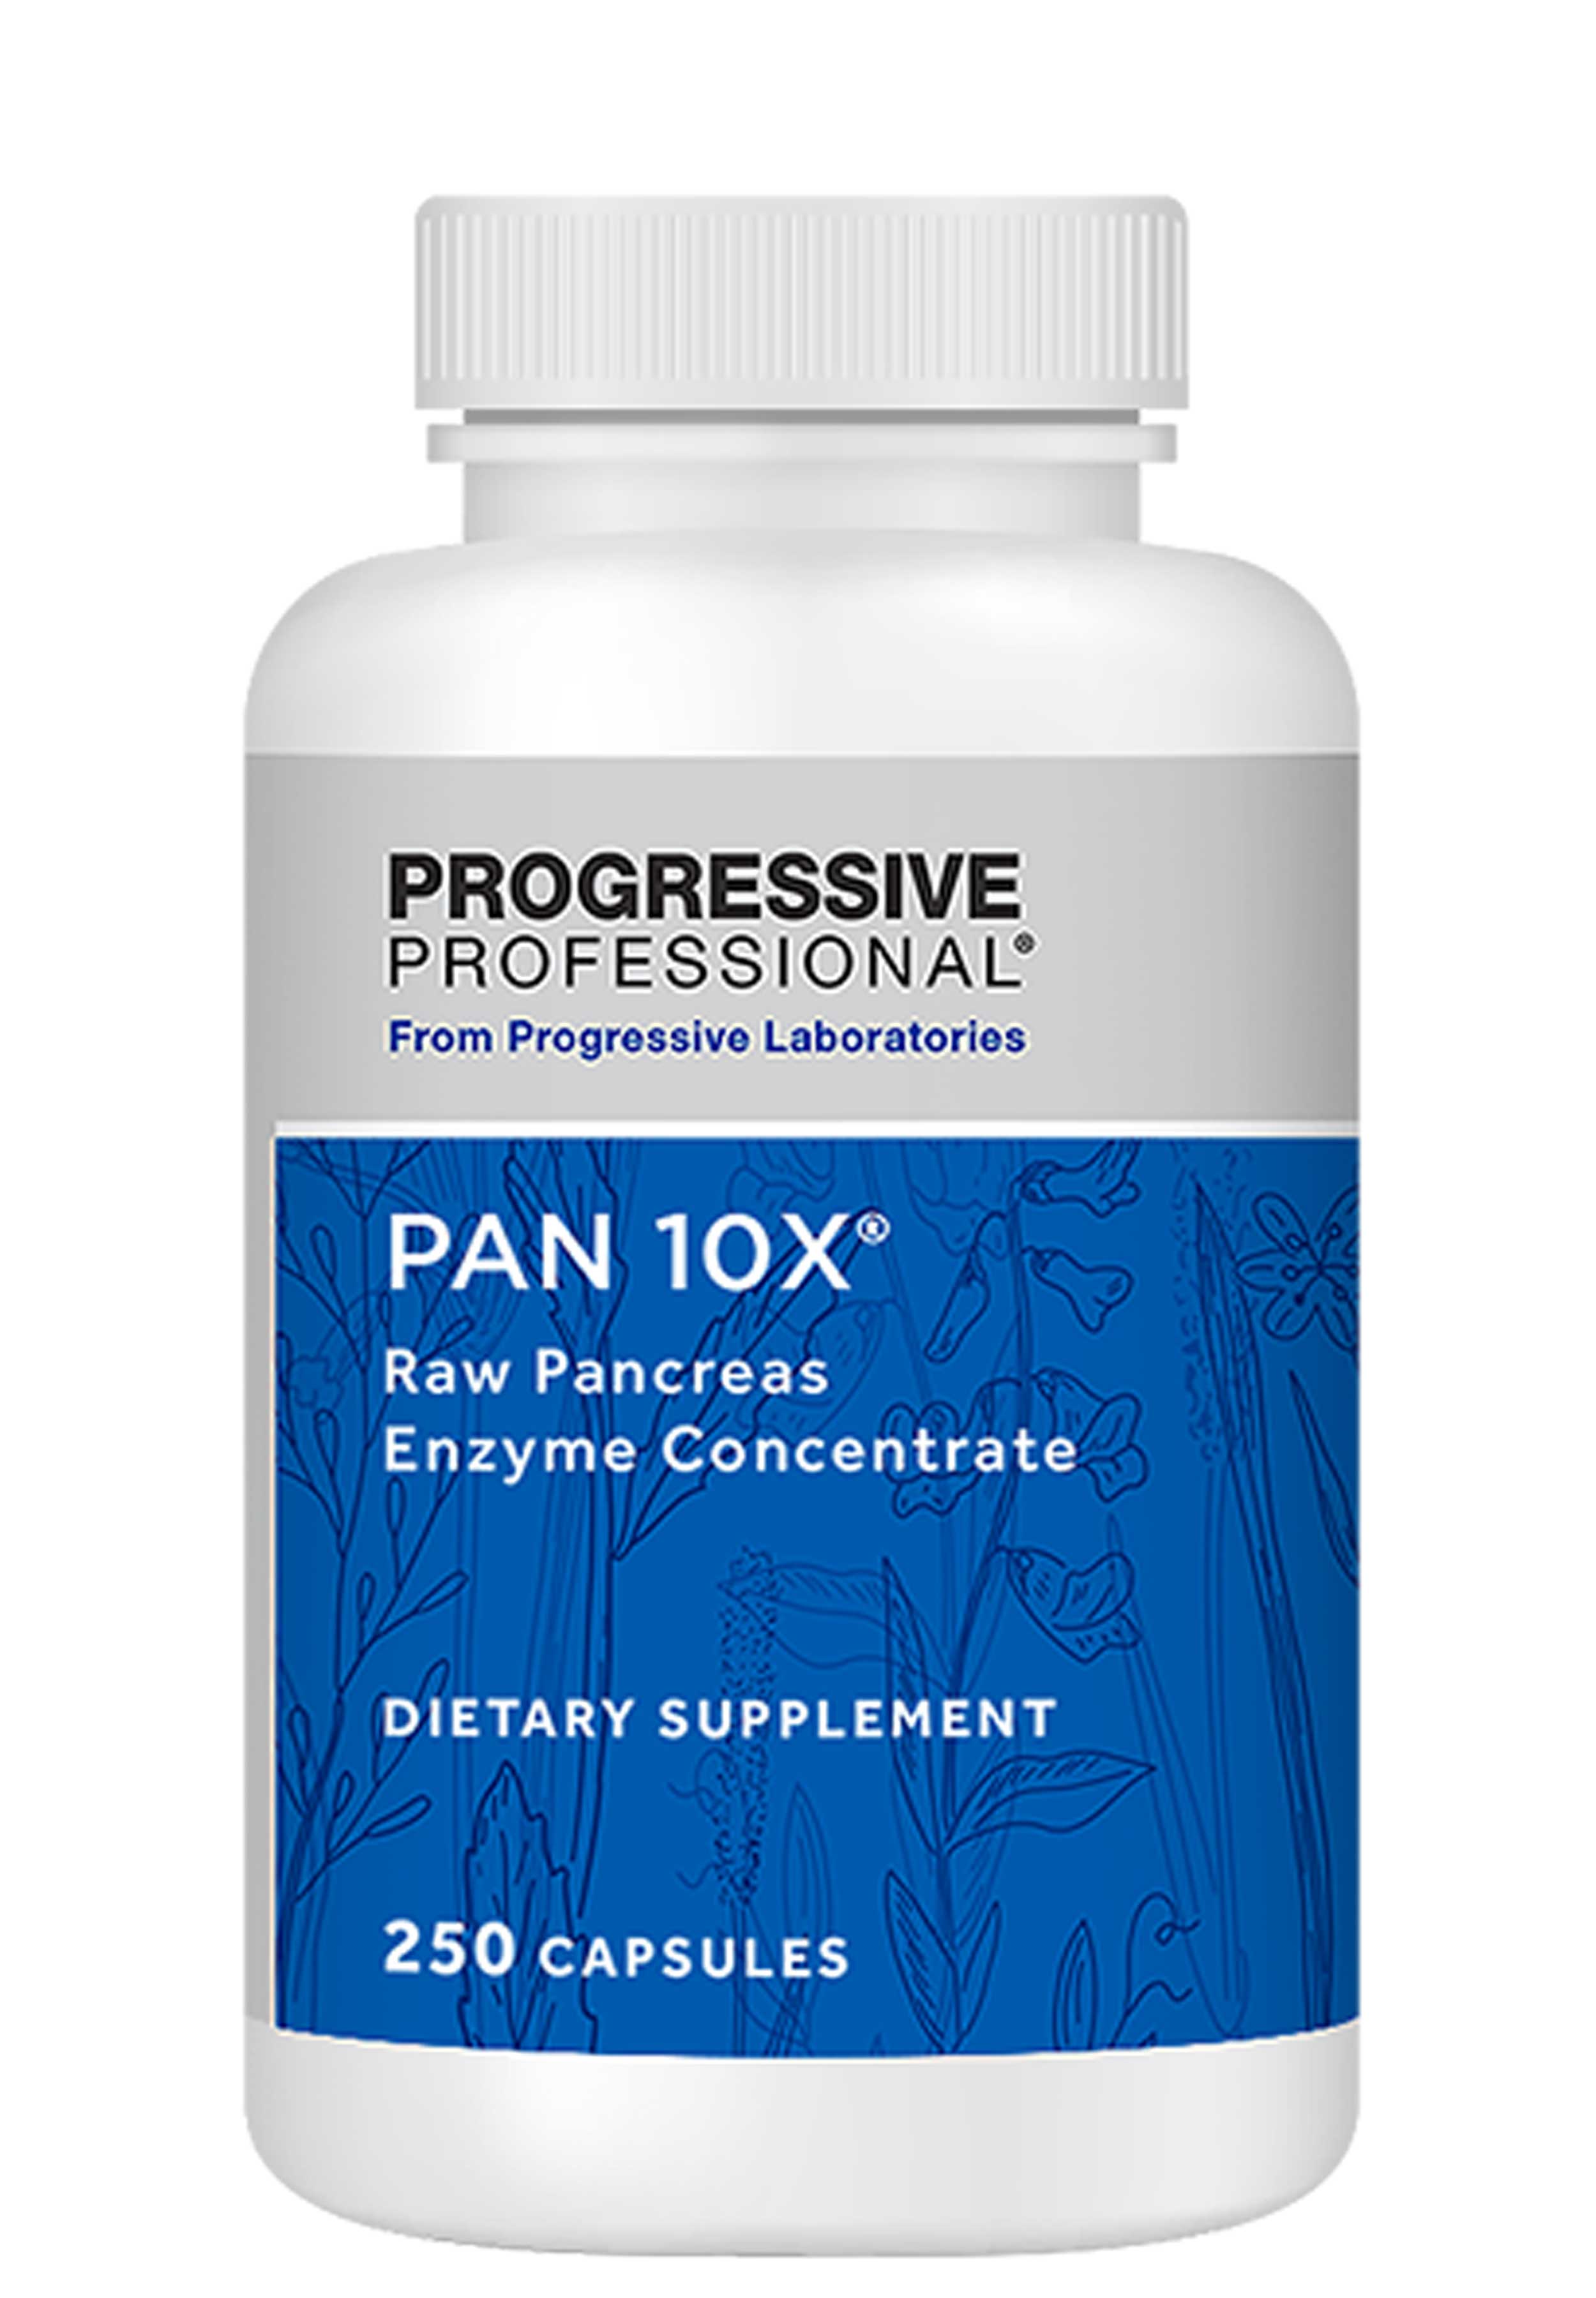 Progressive Laboratories Pan 10x